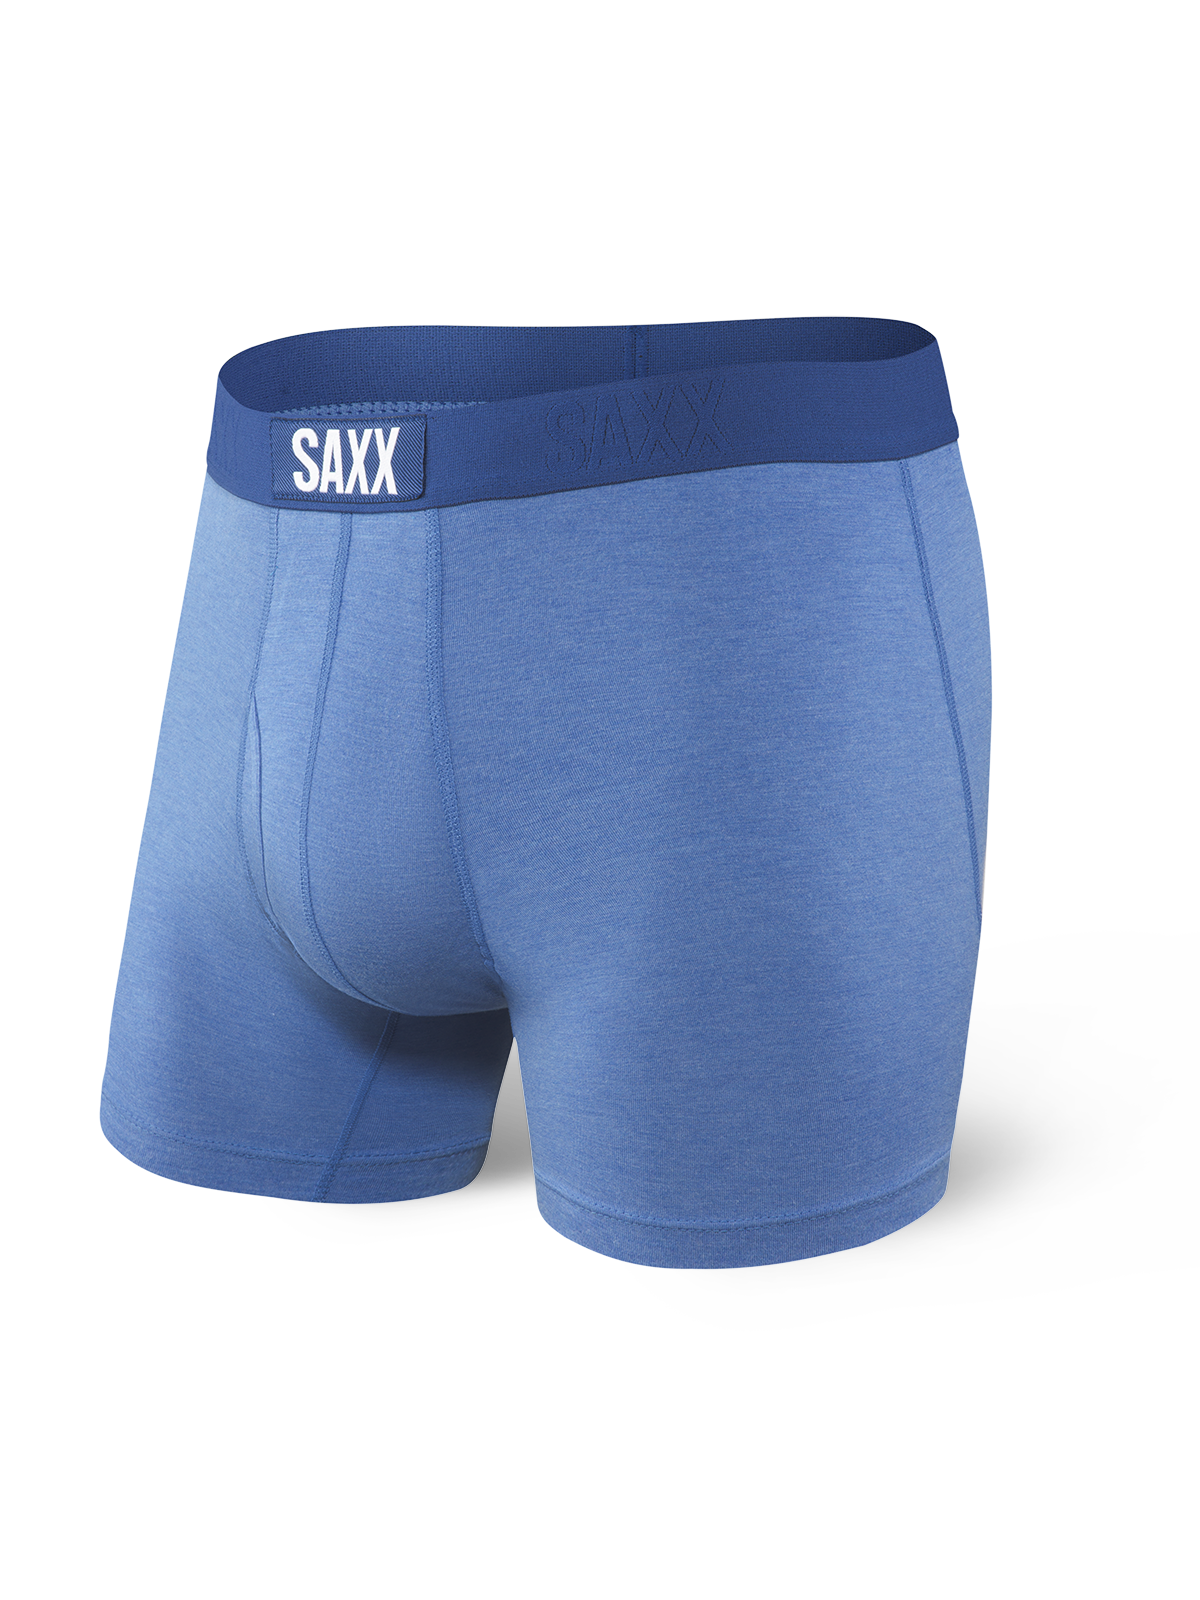 Saxx Ultra Boxer Brief Fly - Men's - Shoplifestyle